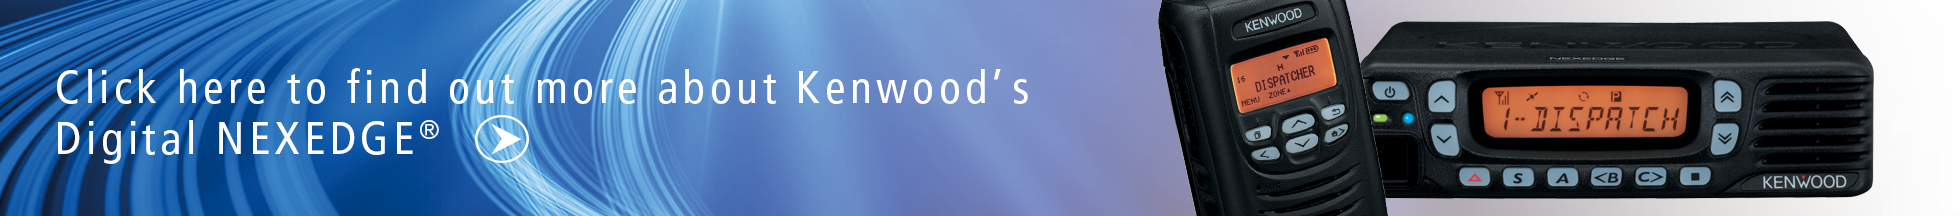 Kenwood Digital NEXEDGE